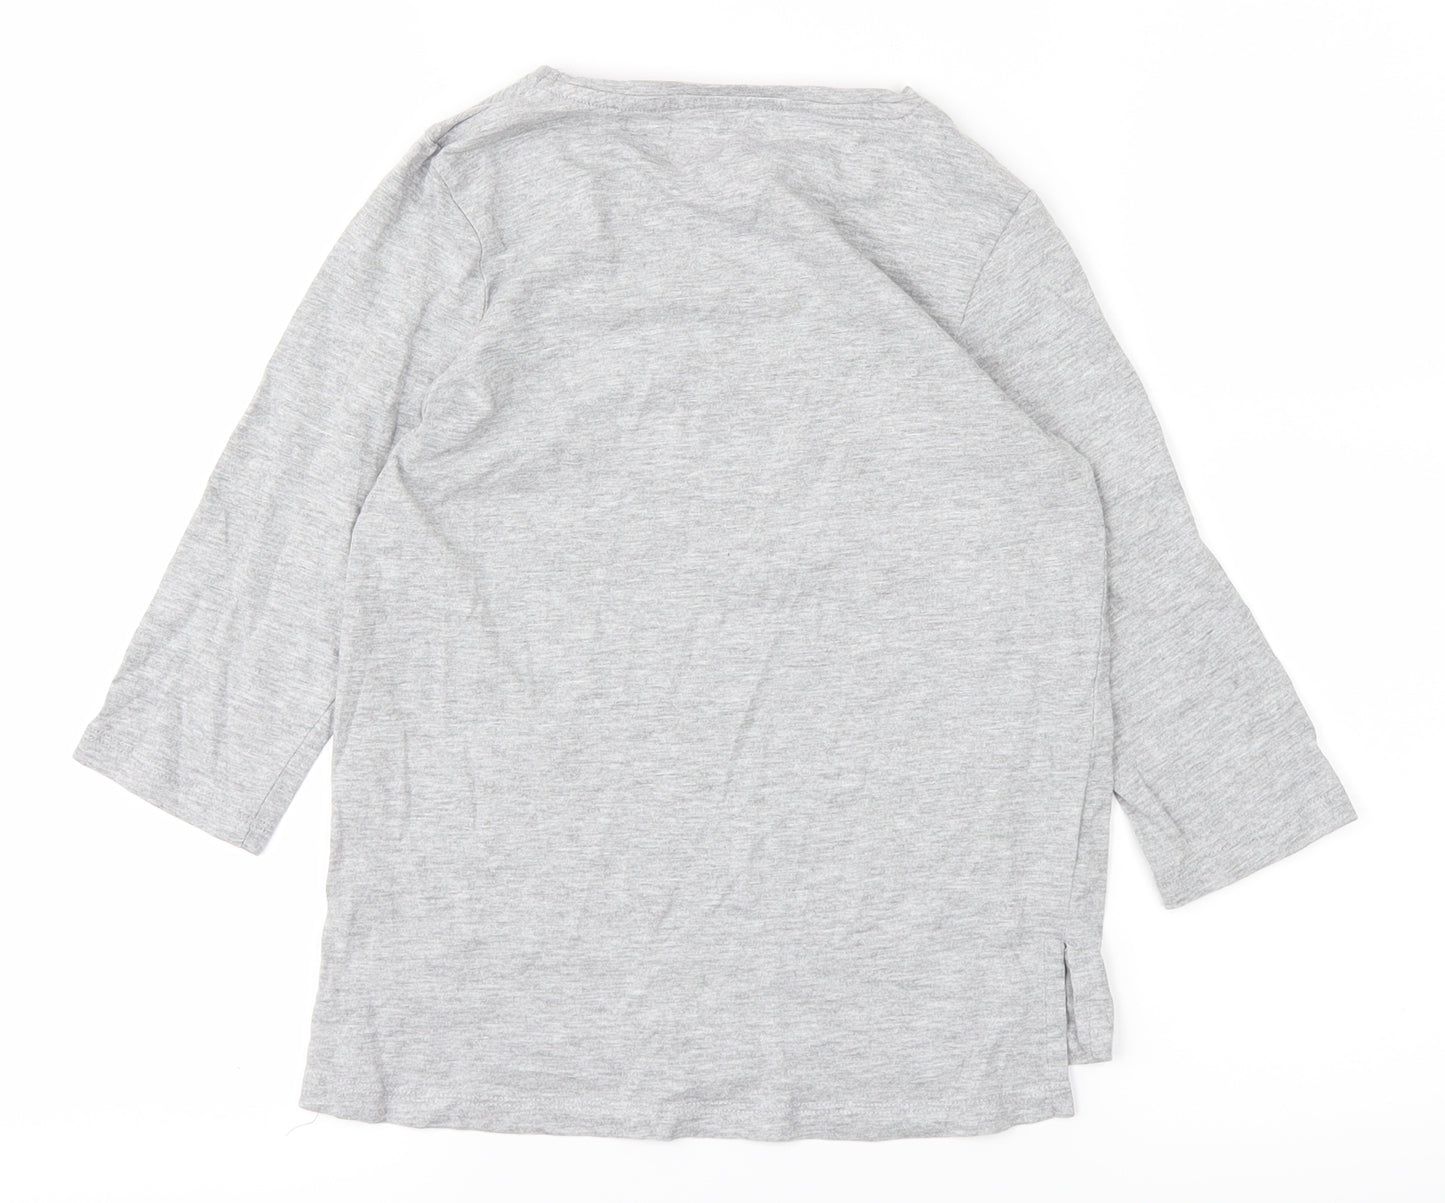 Preworn Girls Grey   Basic T-Shirt Size 8 Years  - Unicorn